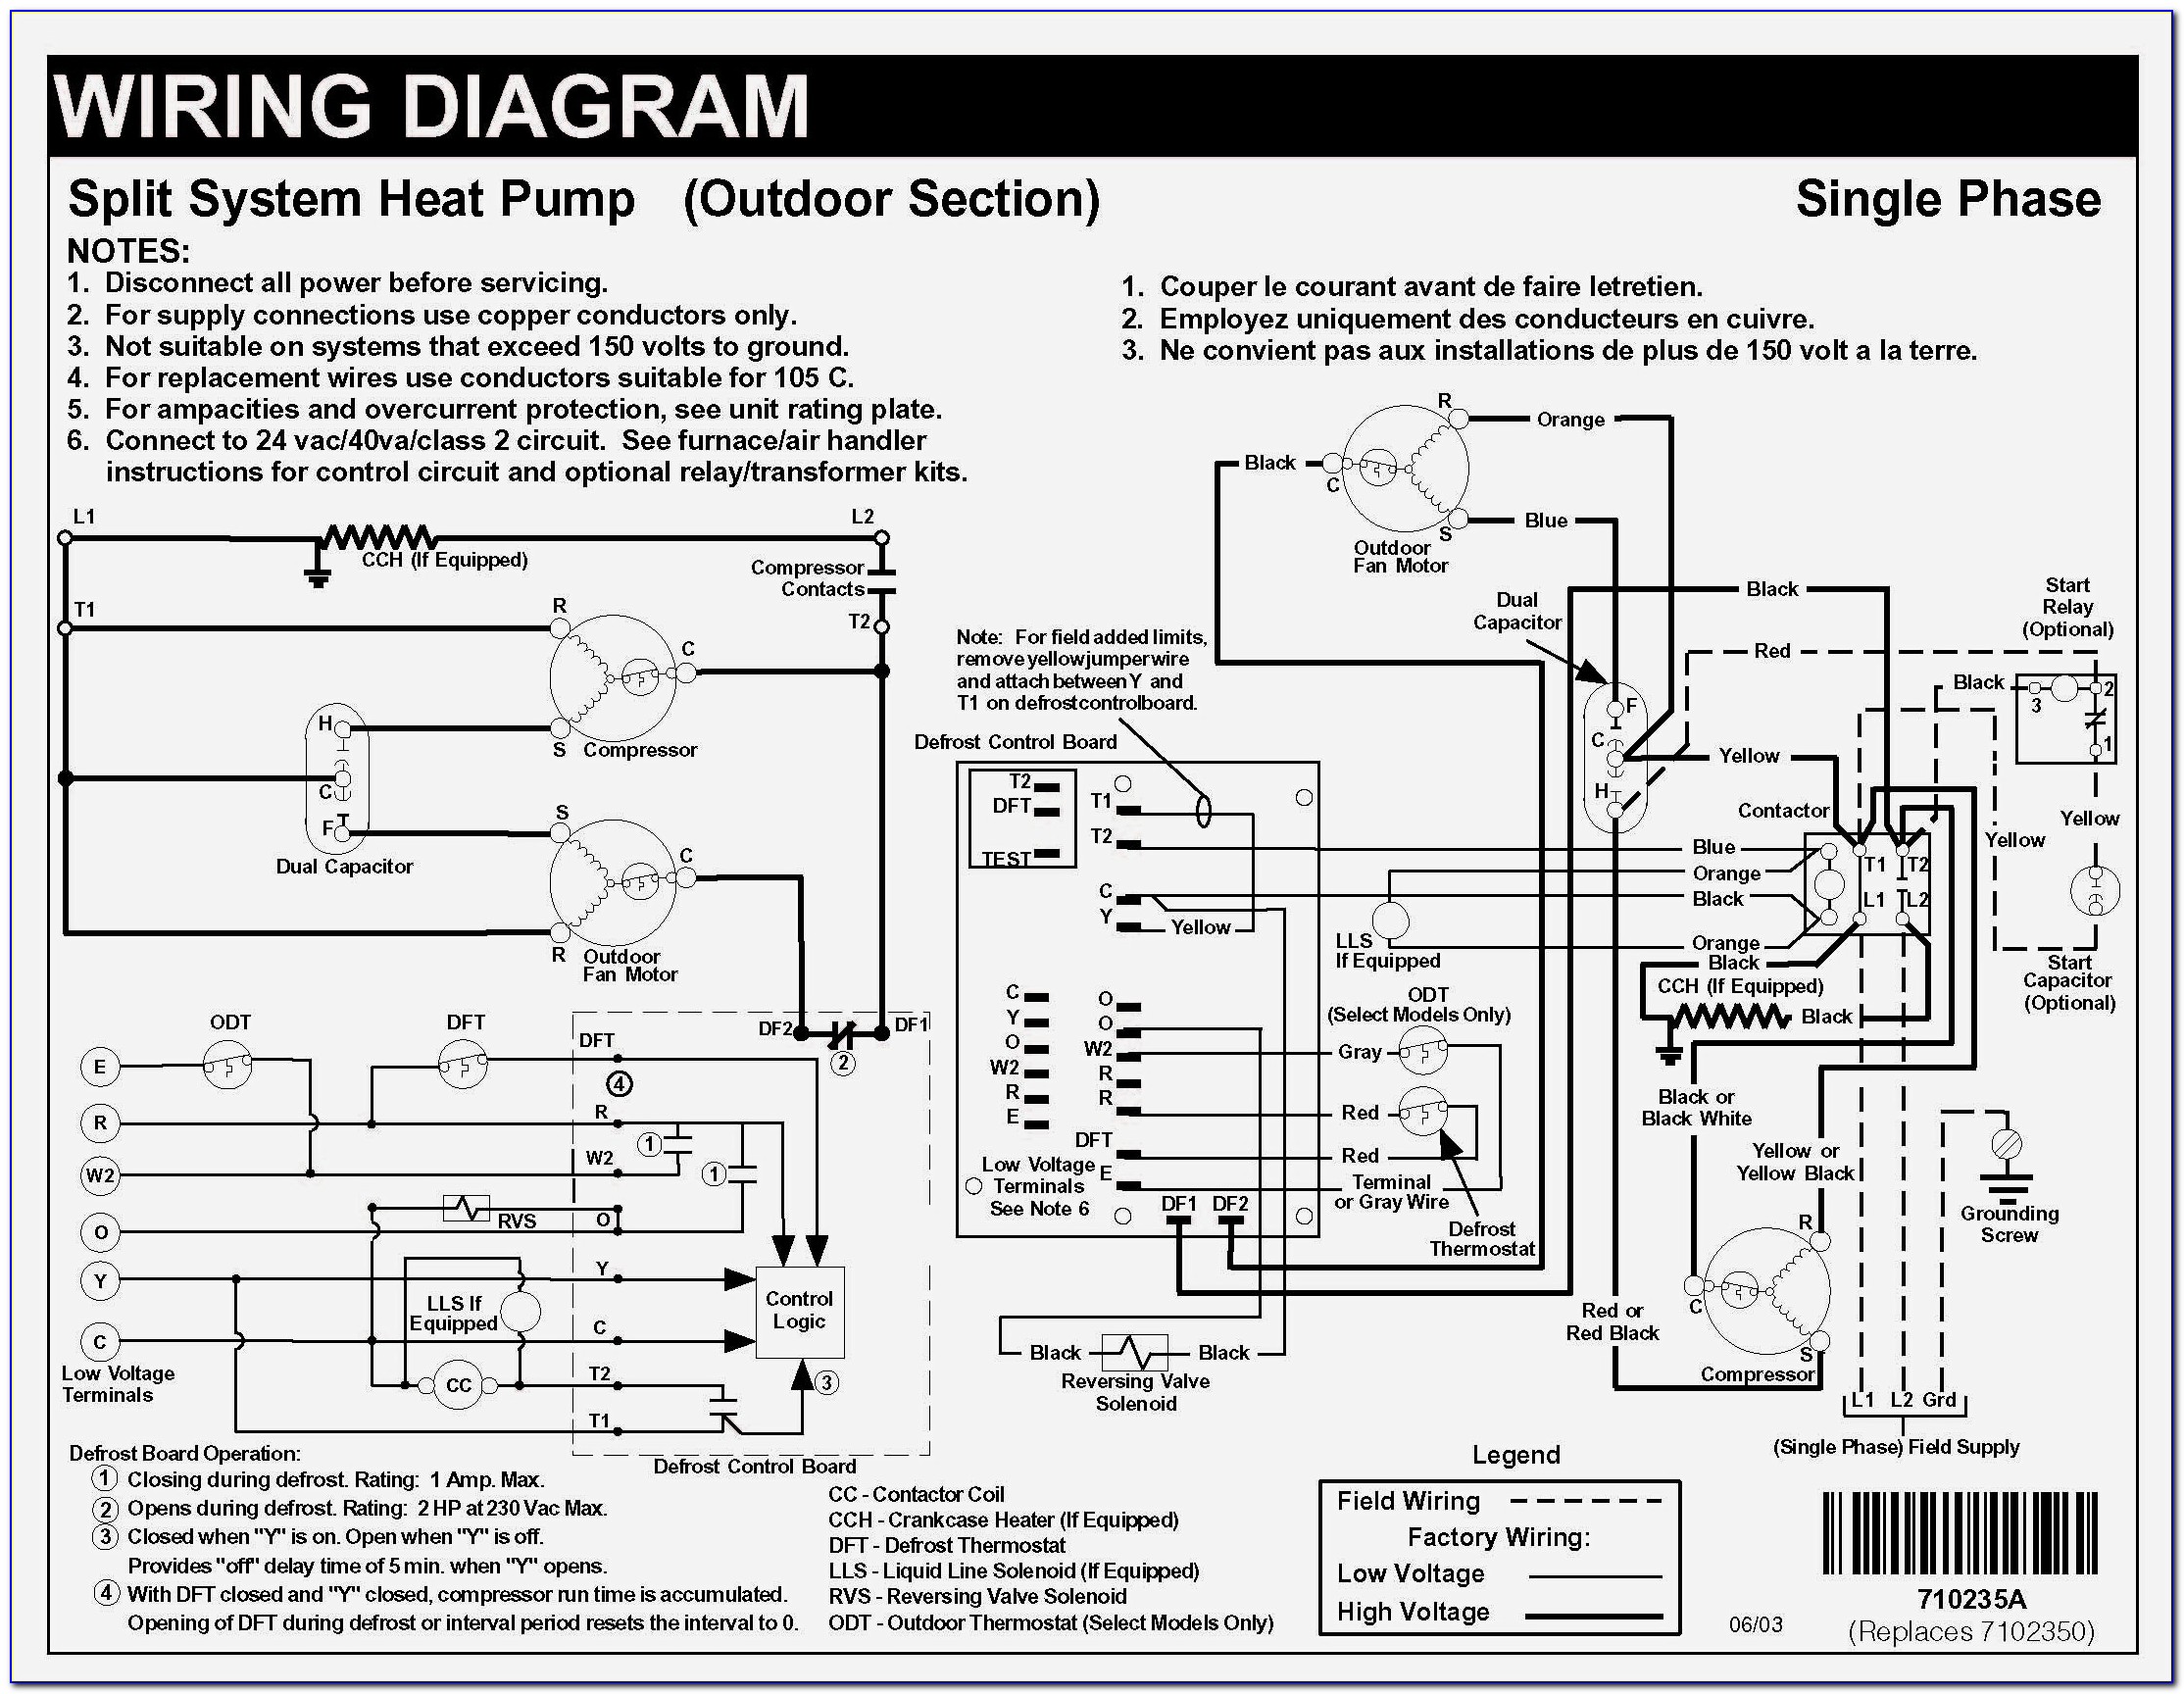 Sears Dryer Wiring Diagram